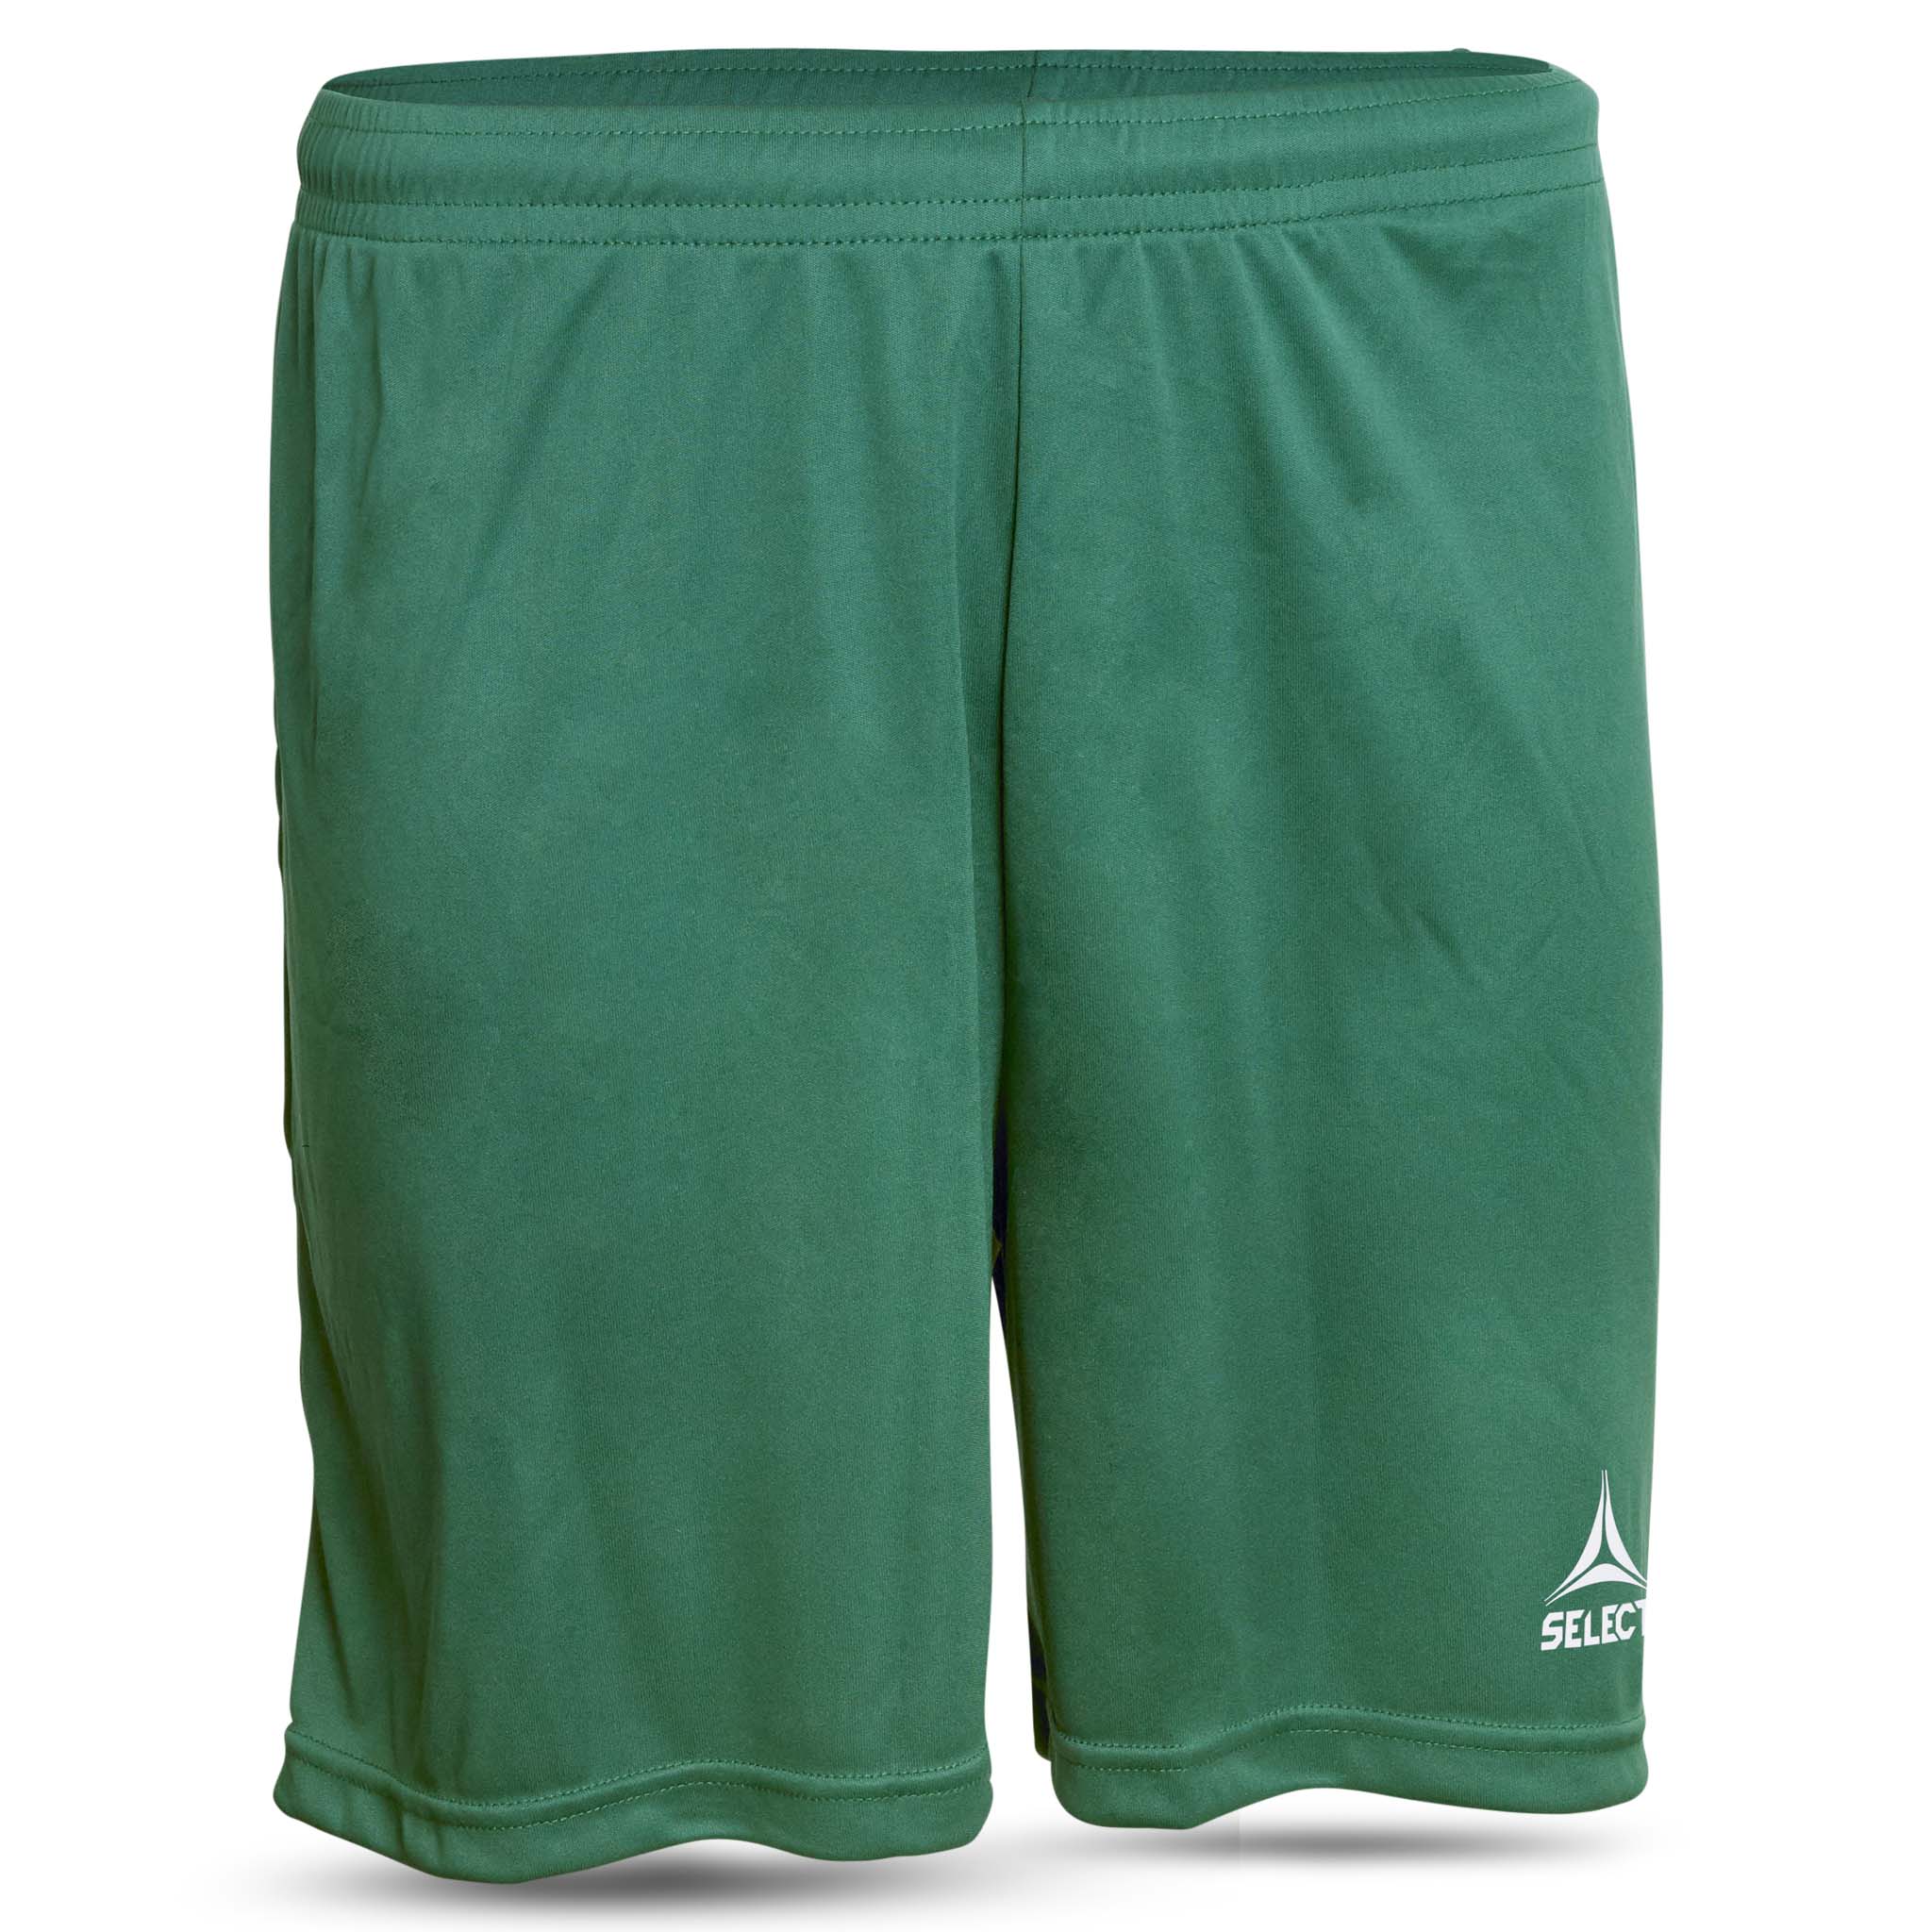 Pisa Player shorts #colour_green